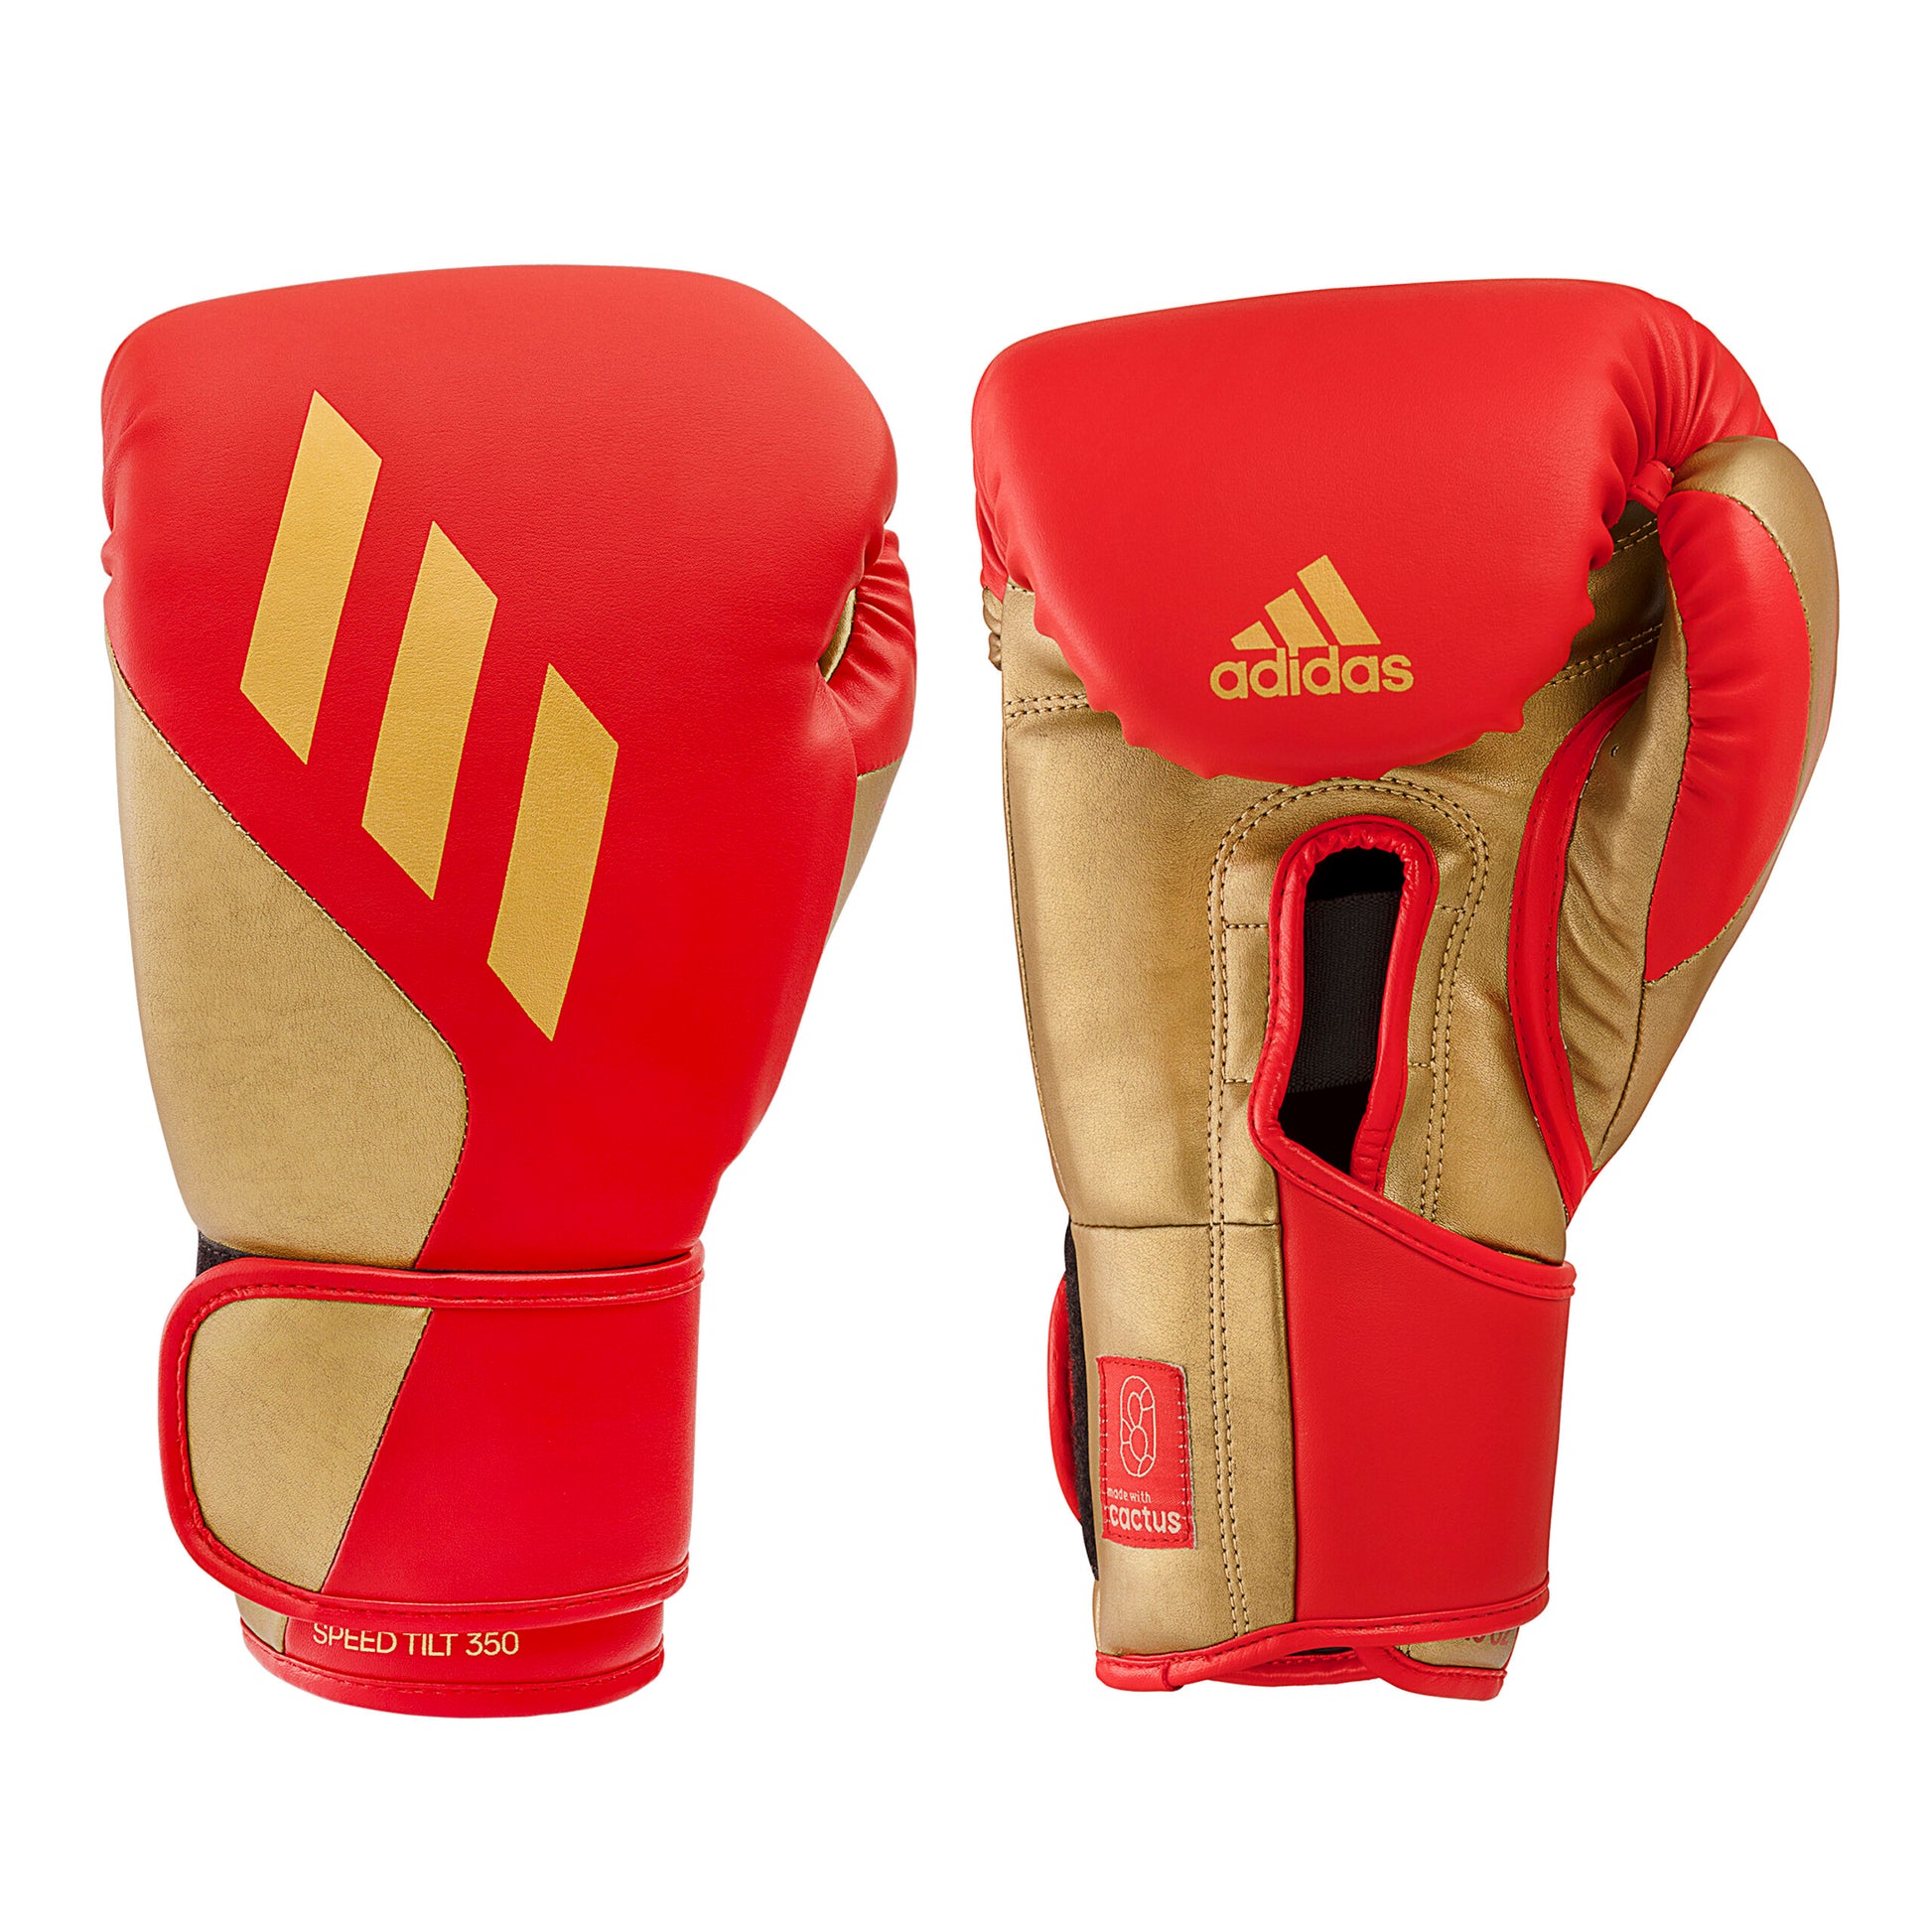 Adispd350tg Adidas Tilt 350 Pro Training Boxing Gloves Velcro Strap Red Gold 01